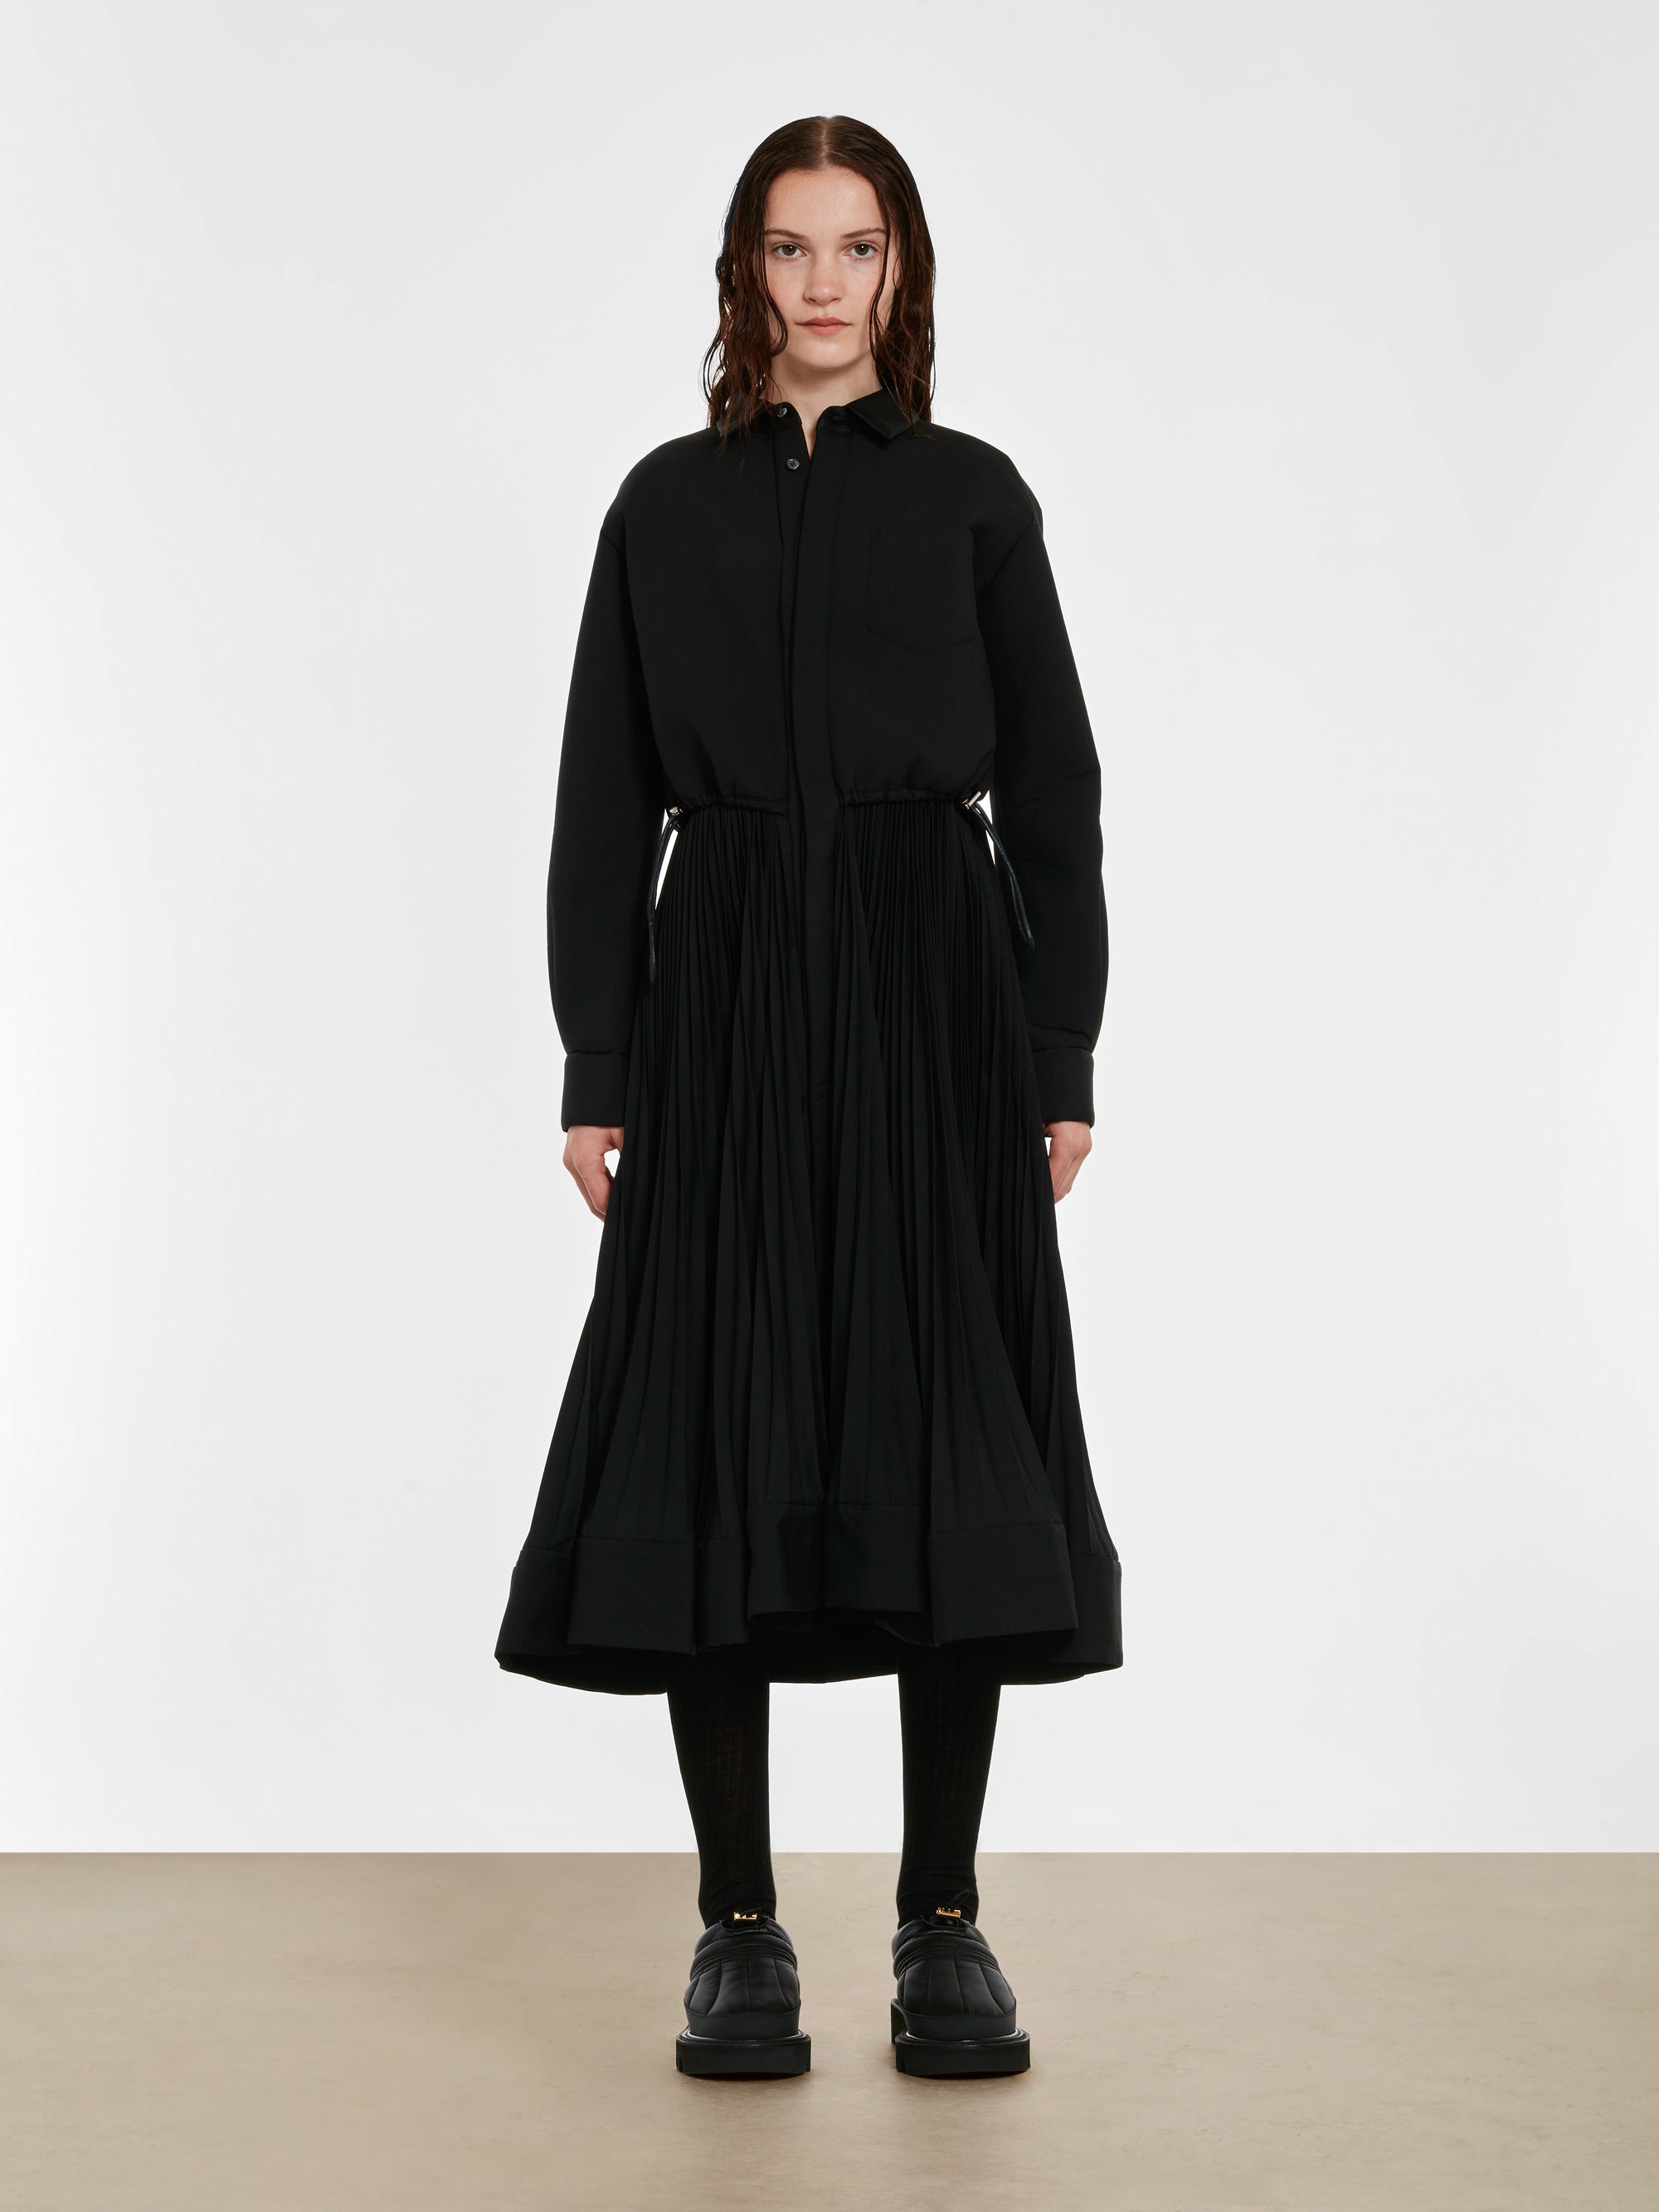 sacai - Women’s Suiting Bonding Dress - (Black) view 1